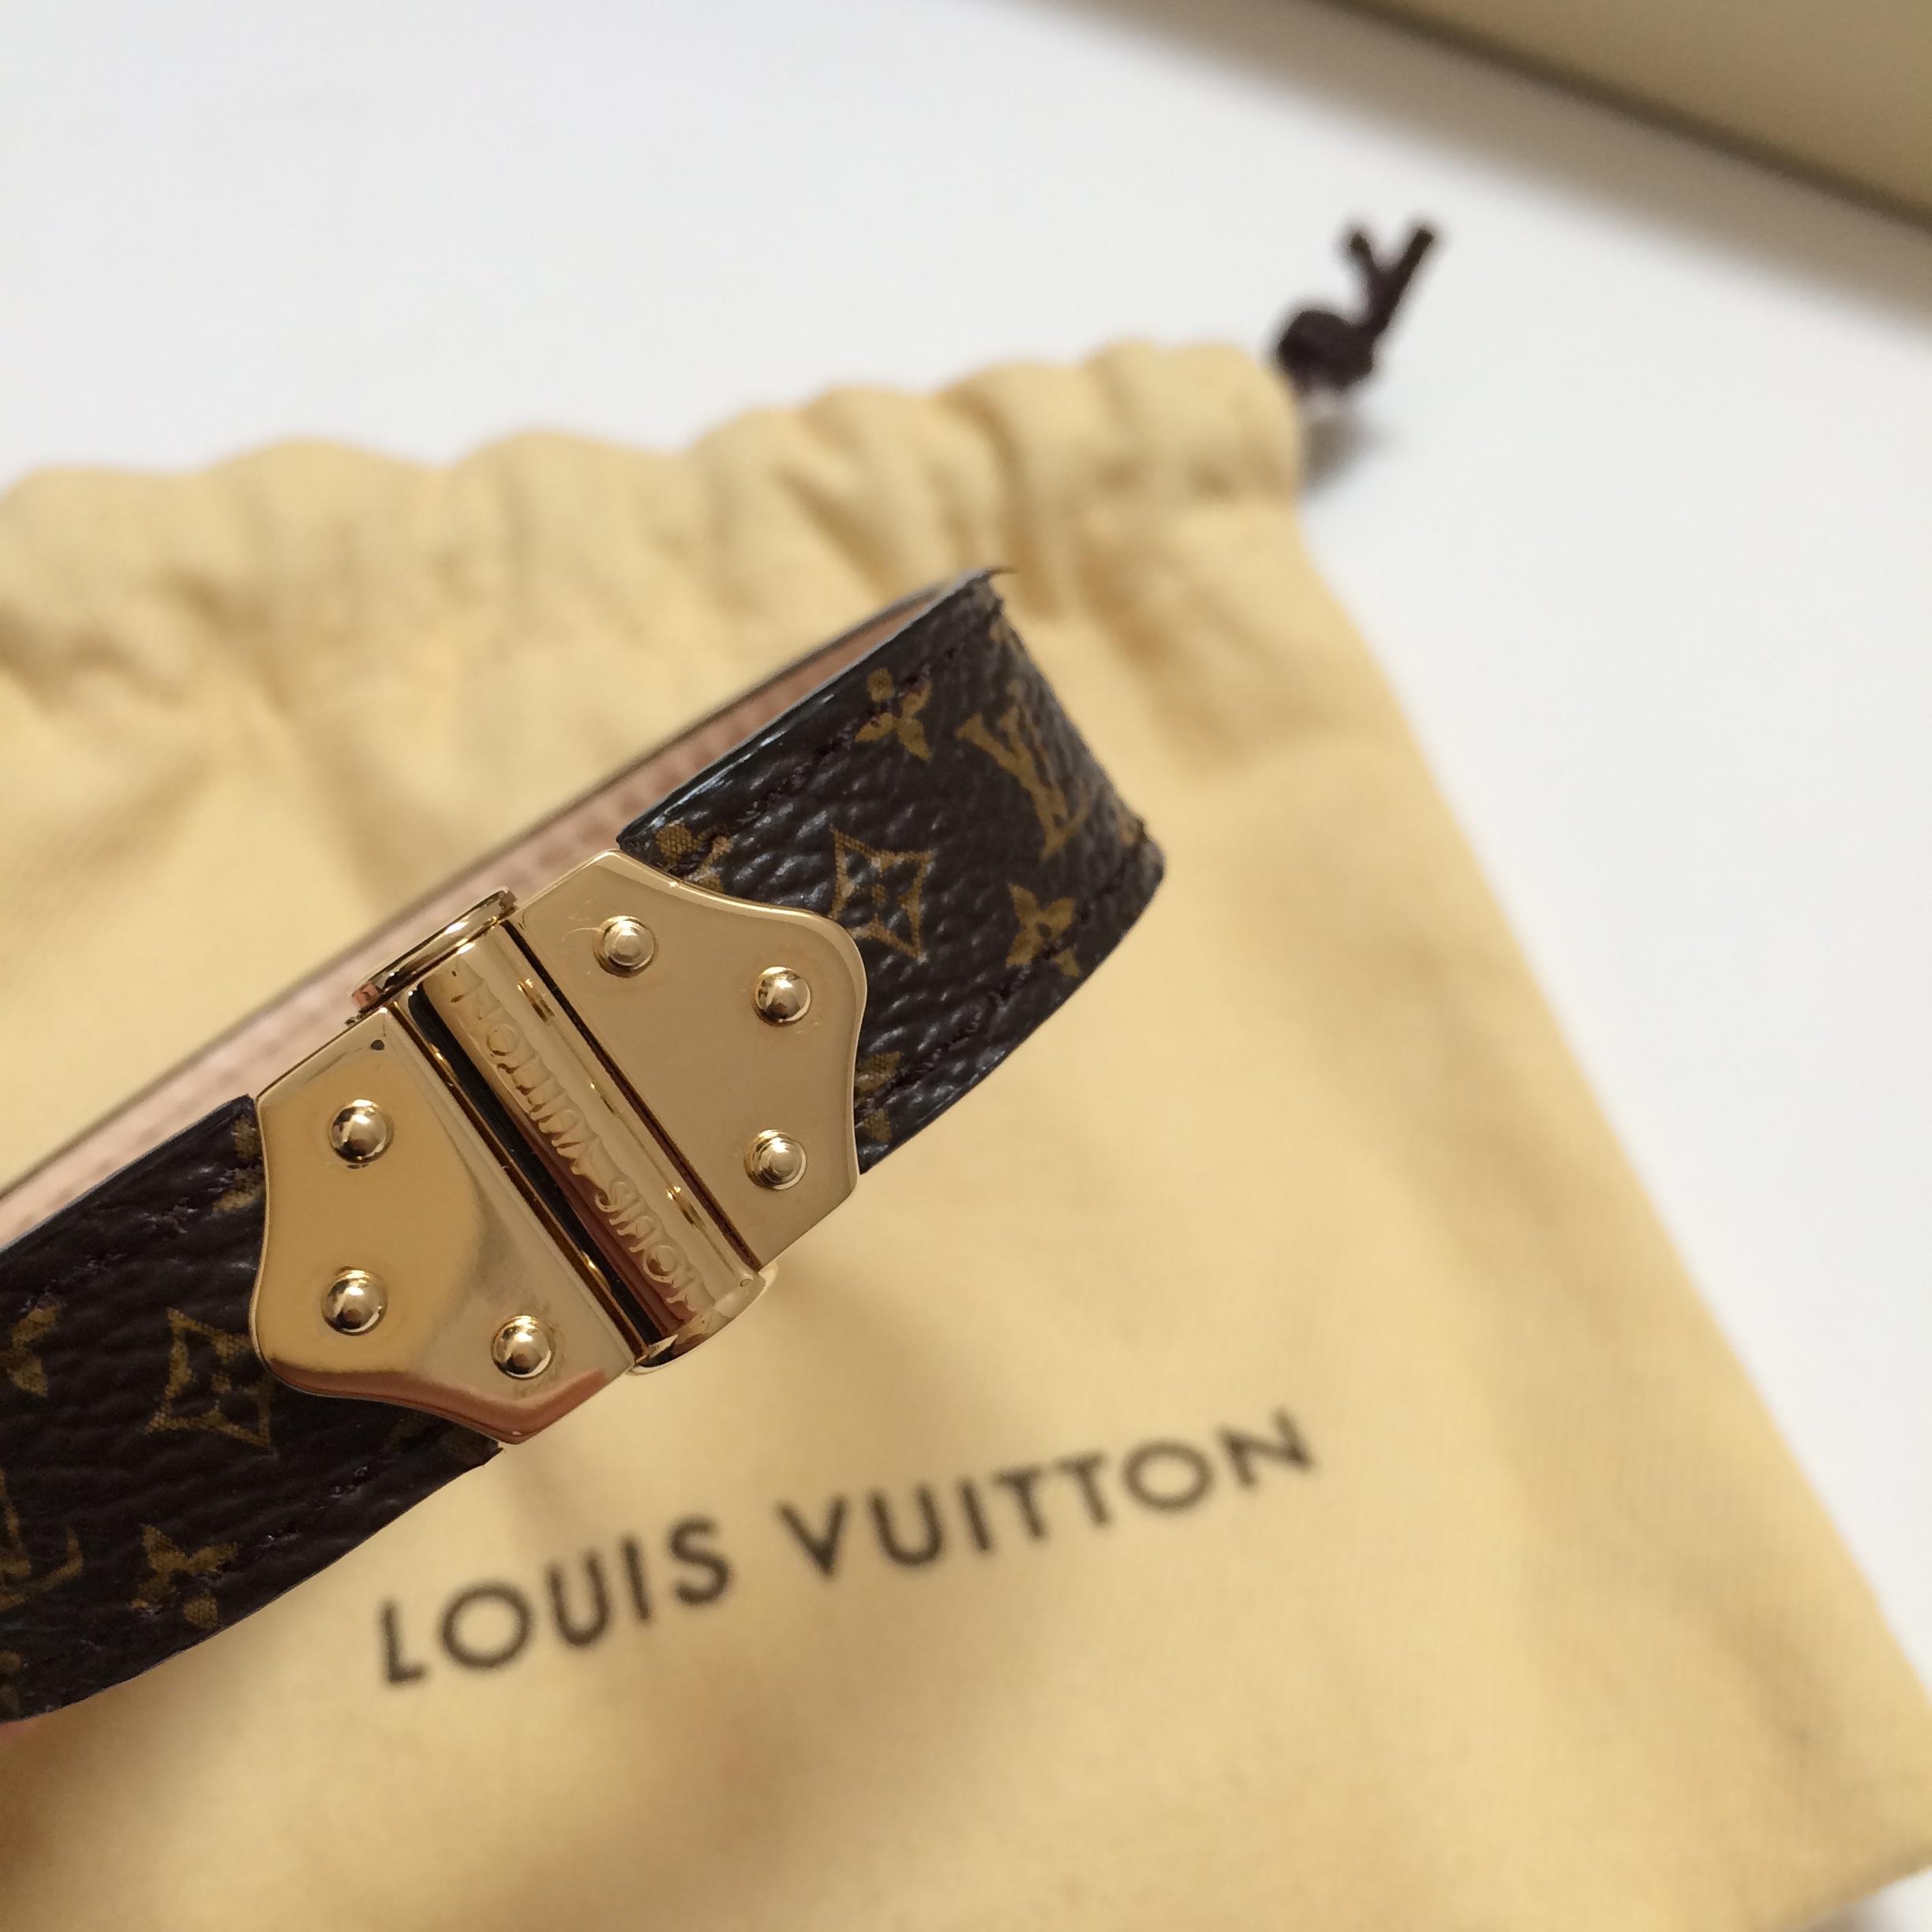 LOUIS VUITTON HAUL, Shopping & Unboxing